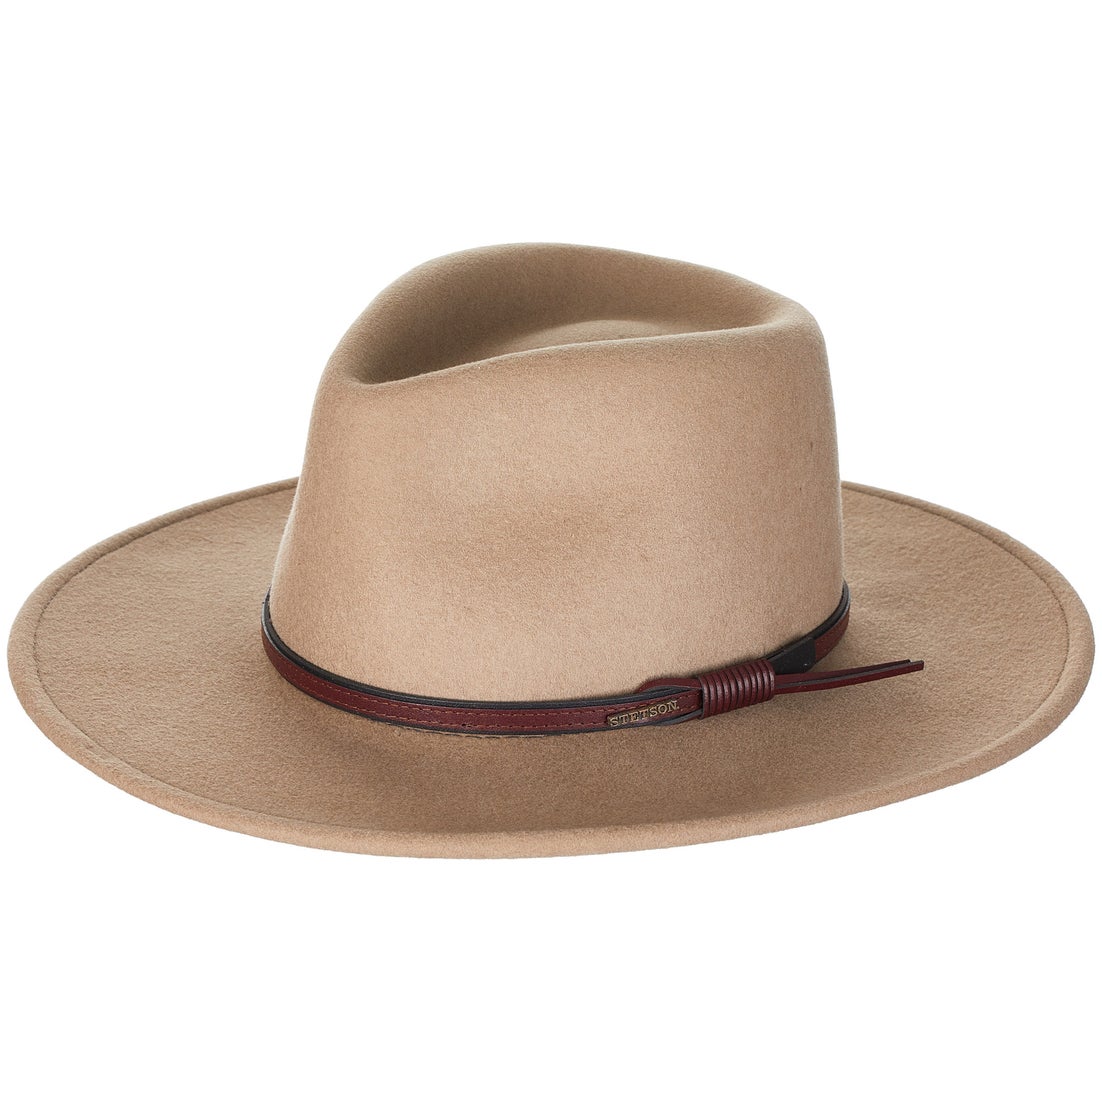 Stetson Bozeman Crushable Outdoor Collection Felt Hat Riding Warehouse